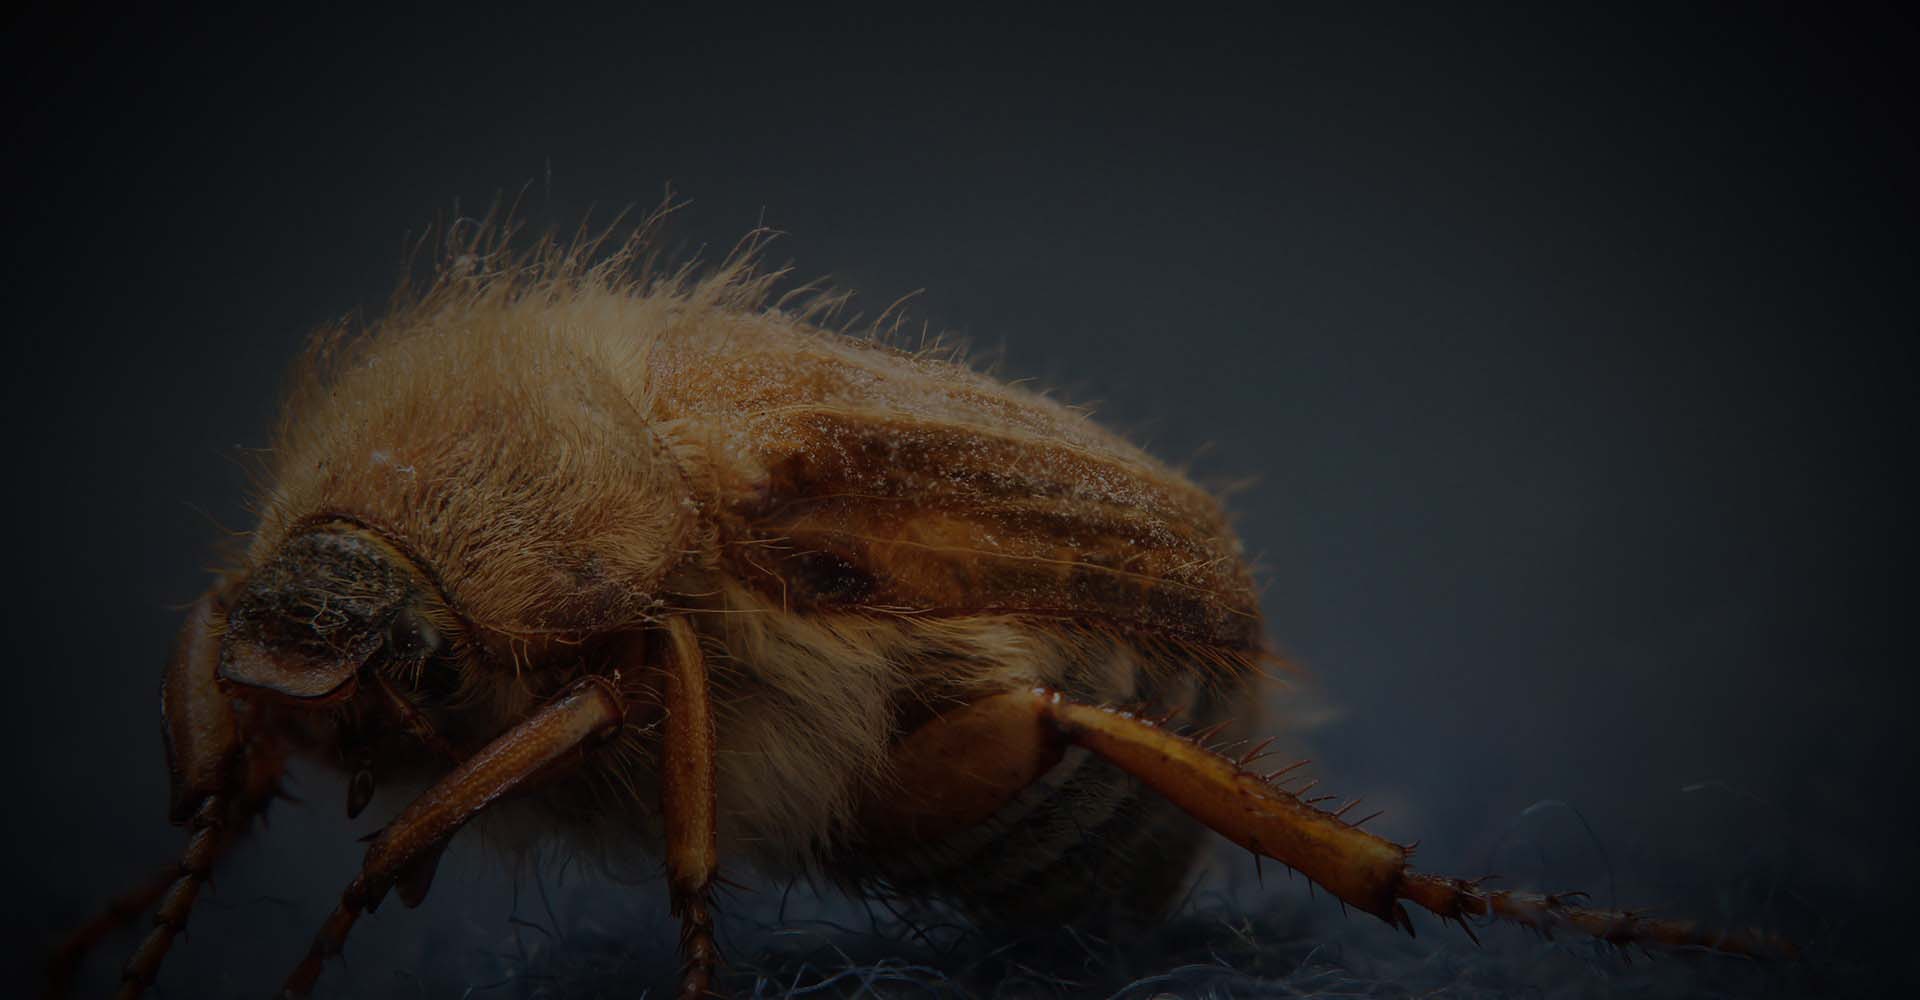 Carpet Beetle Pest Control